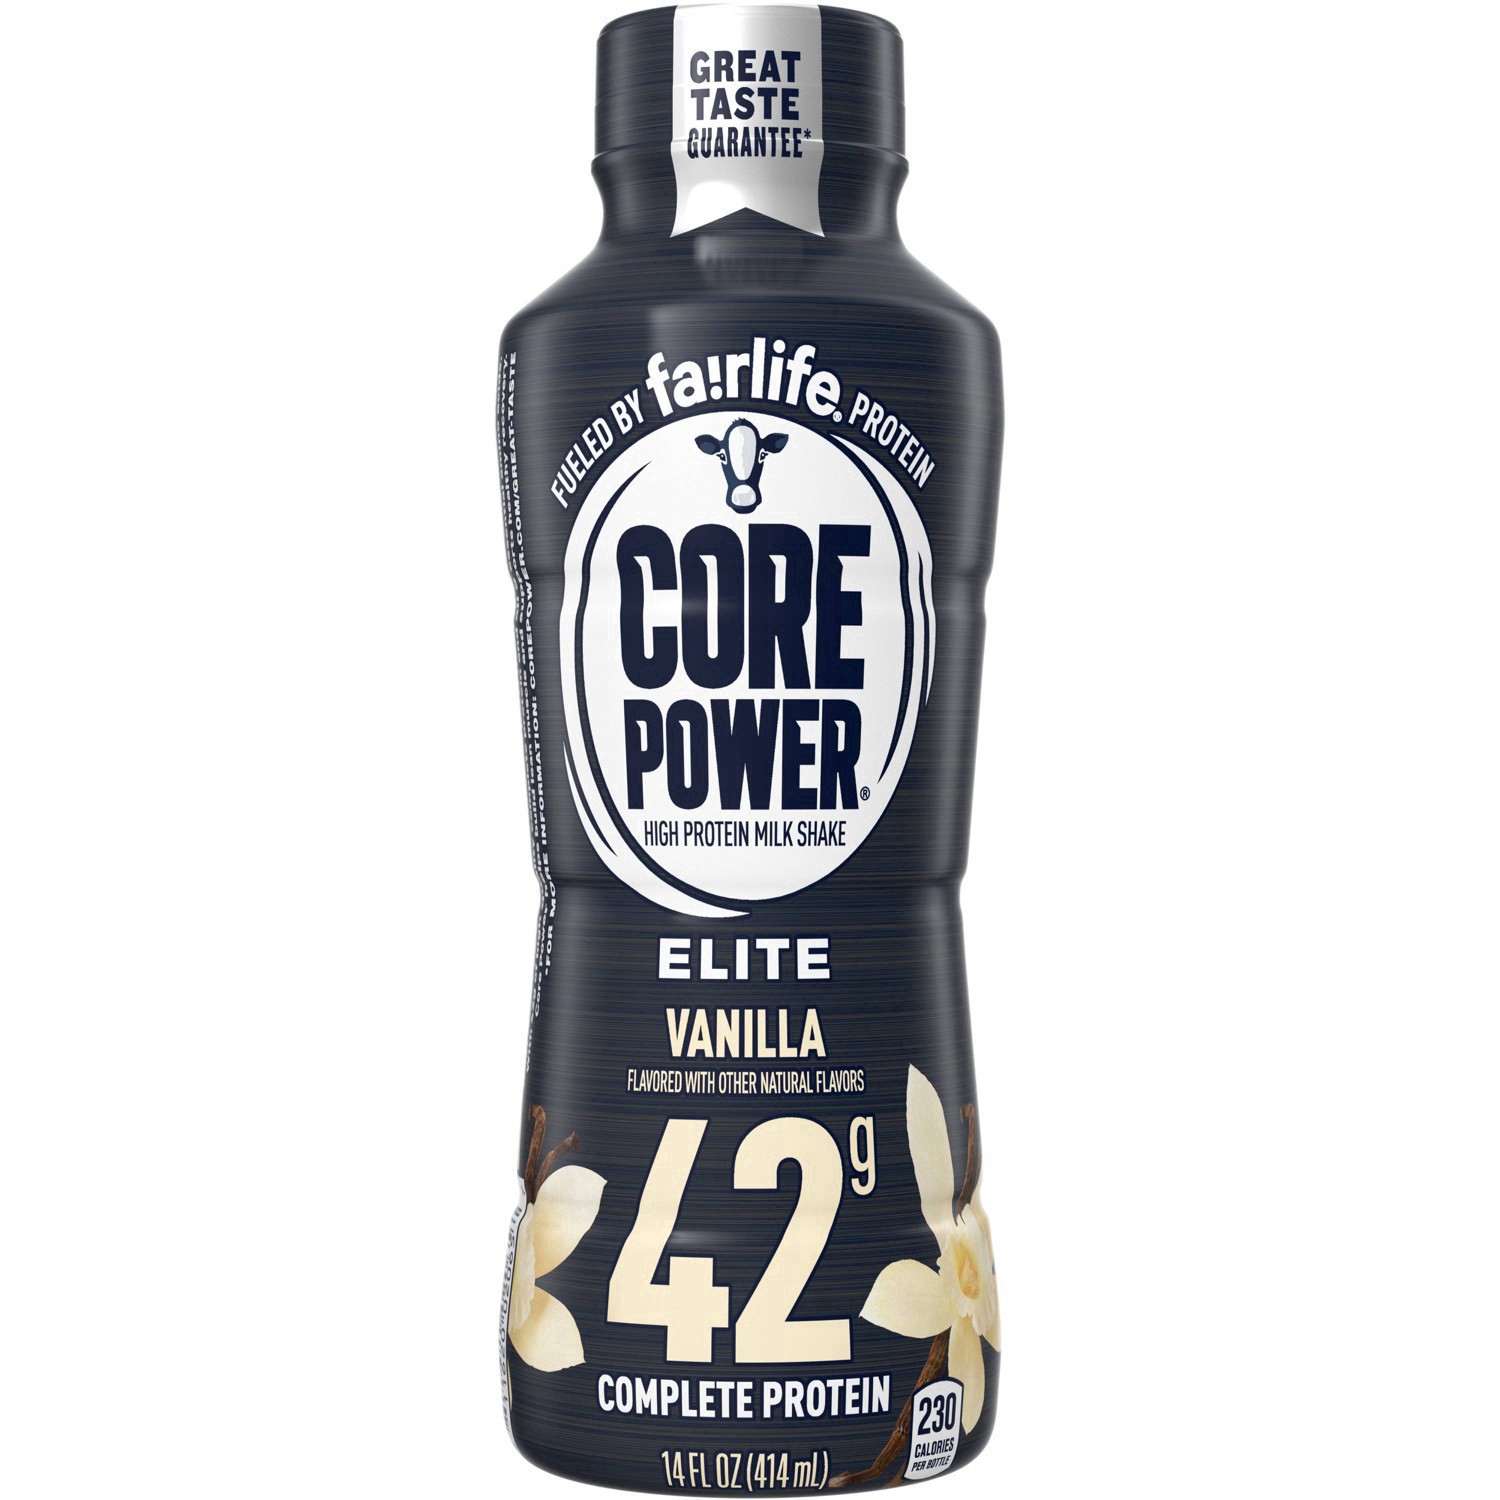 slide 74 of 78, Core Power High Protein Elite Vanilla Milk Shake 14 fl oz, 14 fl oz